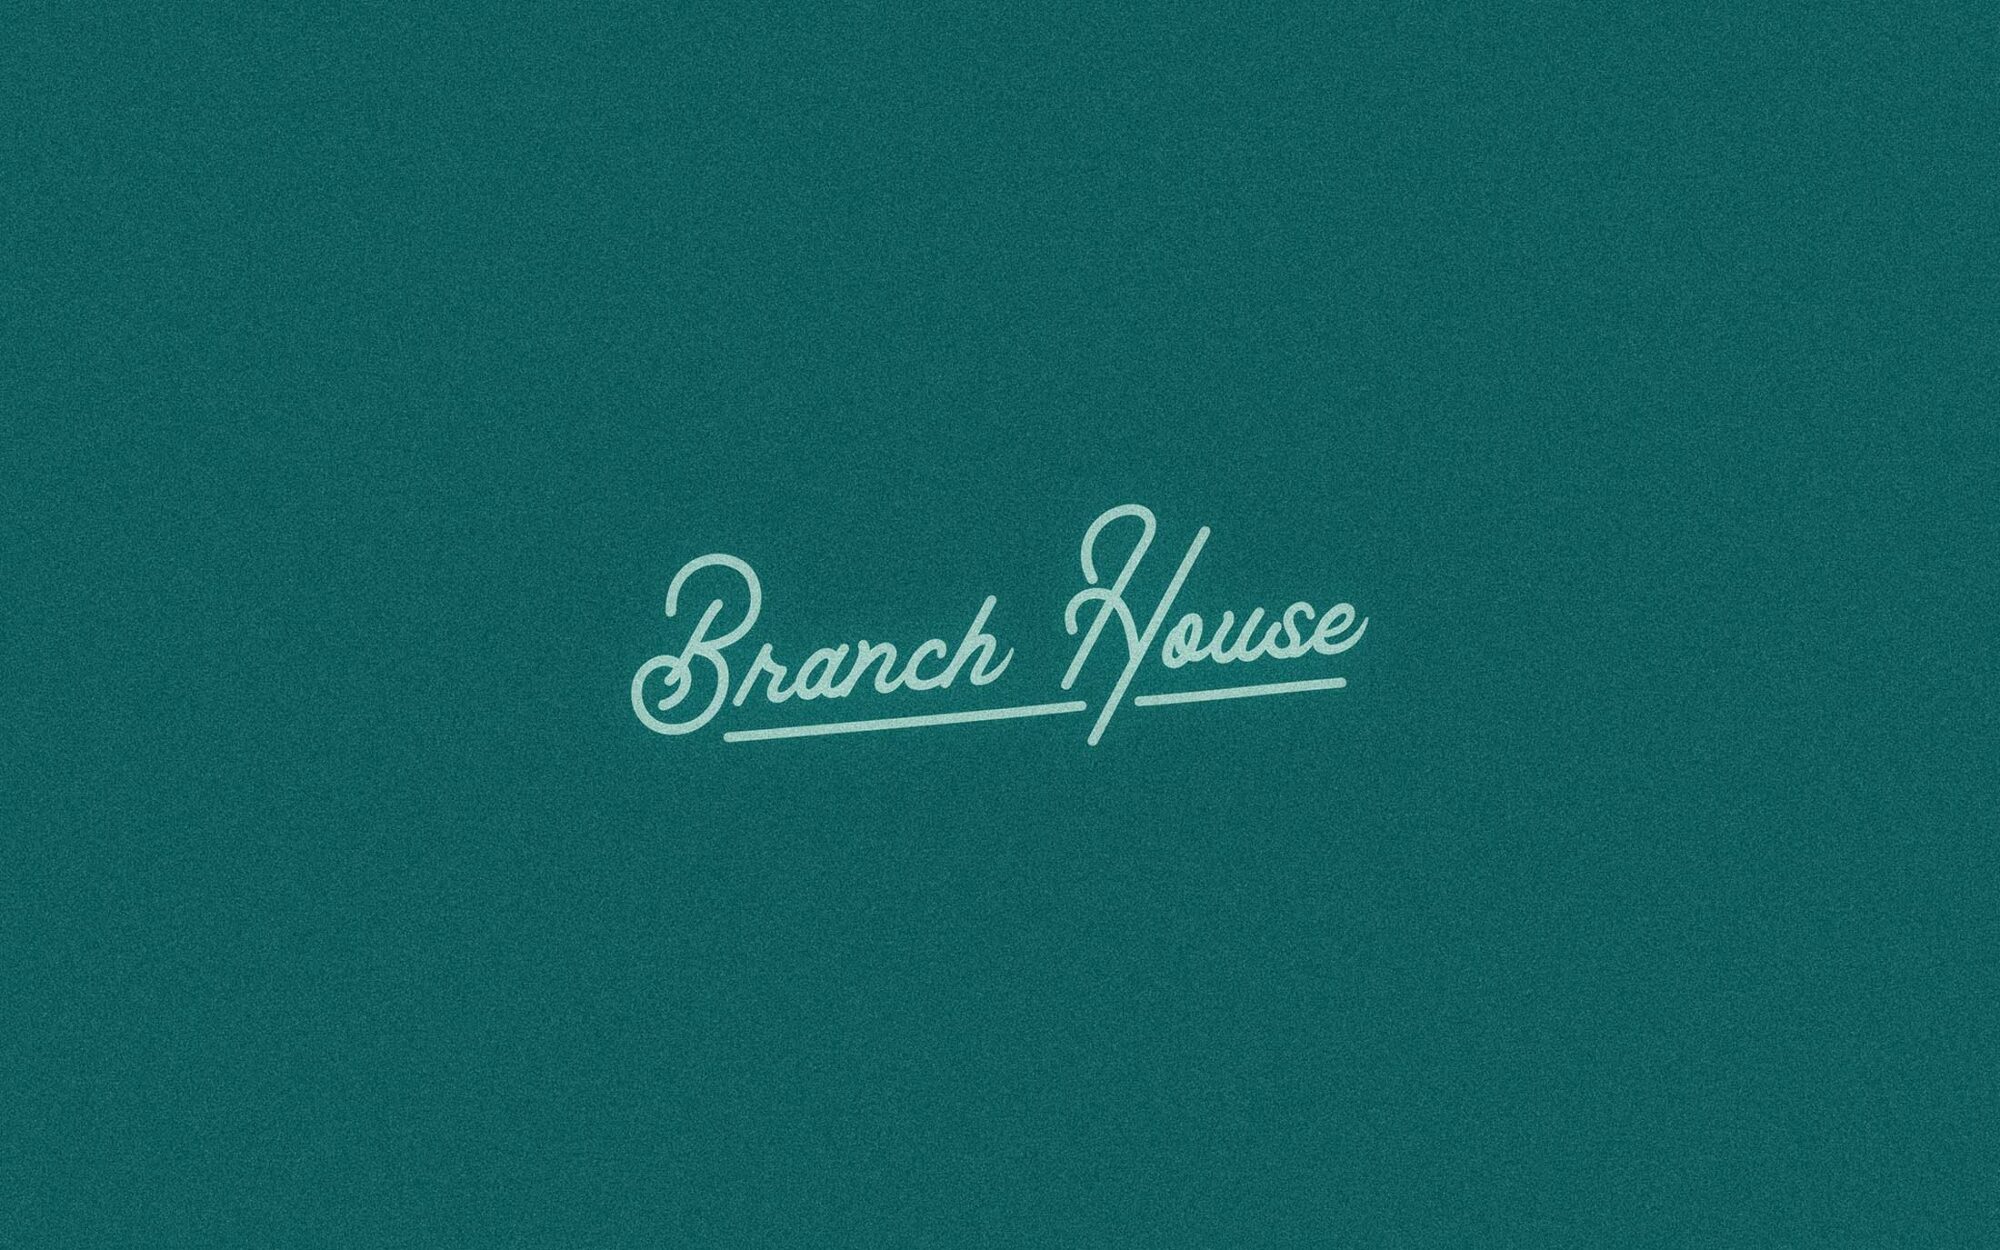 custom script logo for Branch House by Longitude